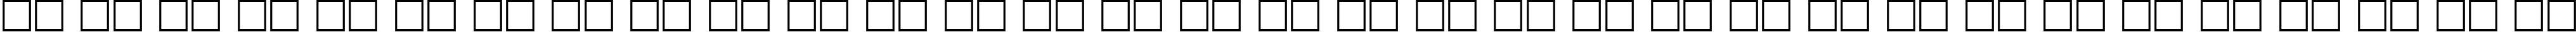 Пример написания русского алфавита шрифтом Greek serge1 normal